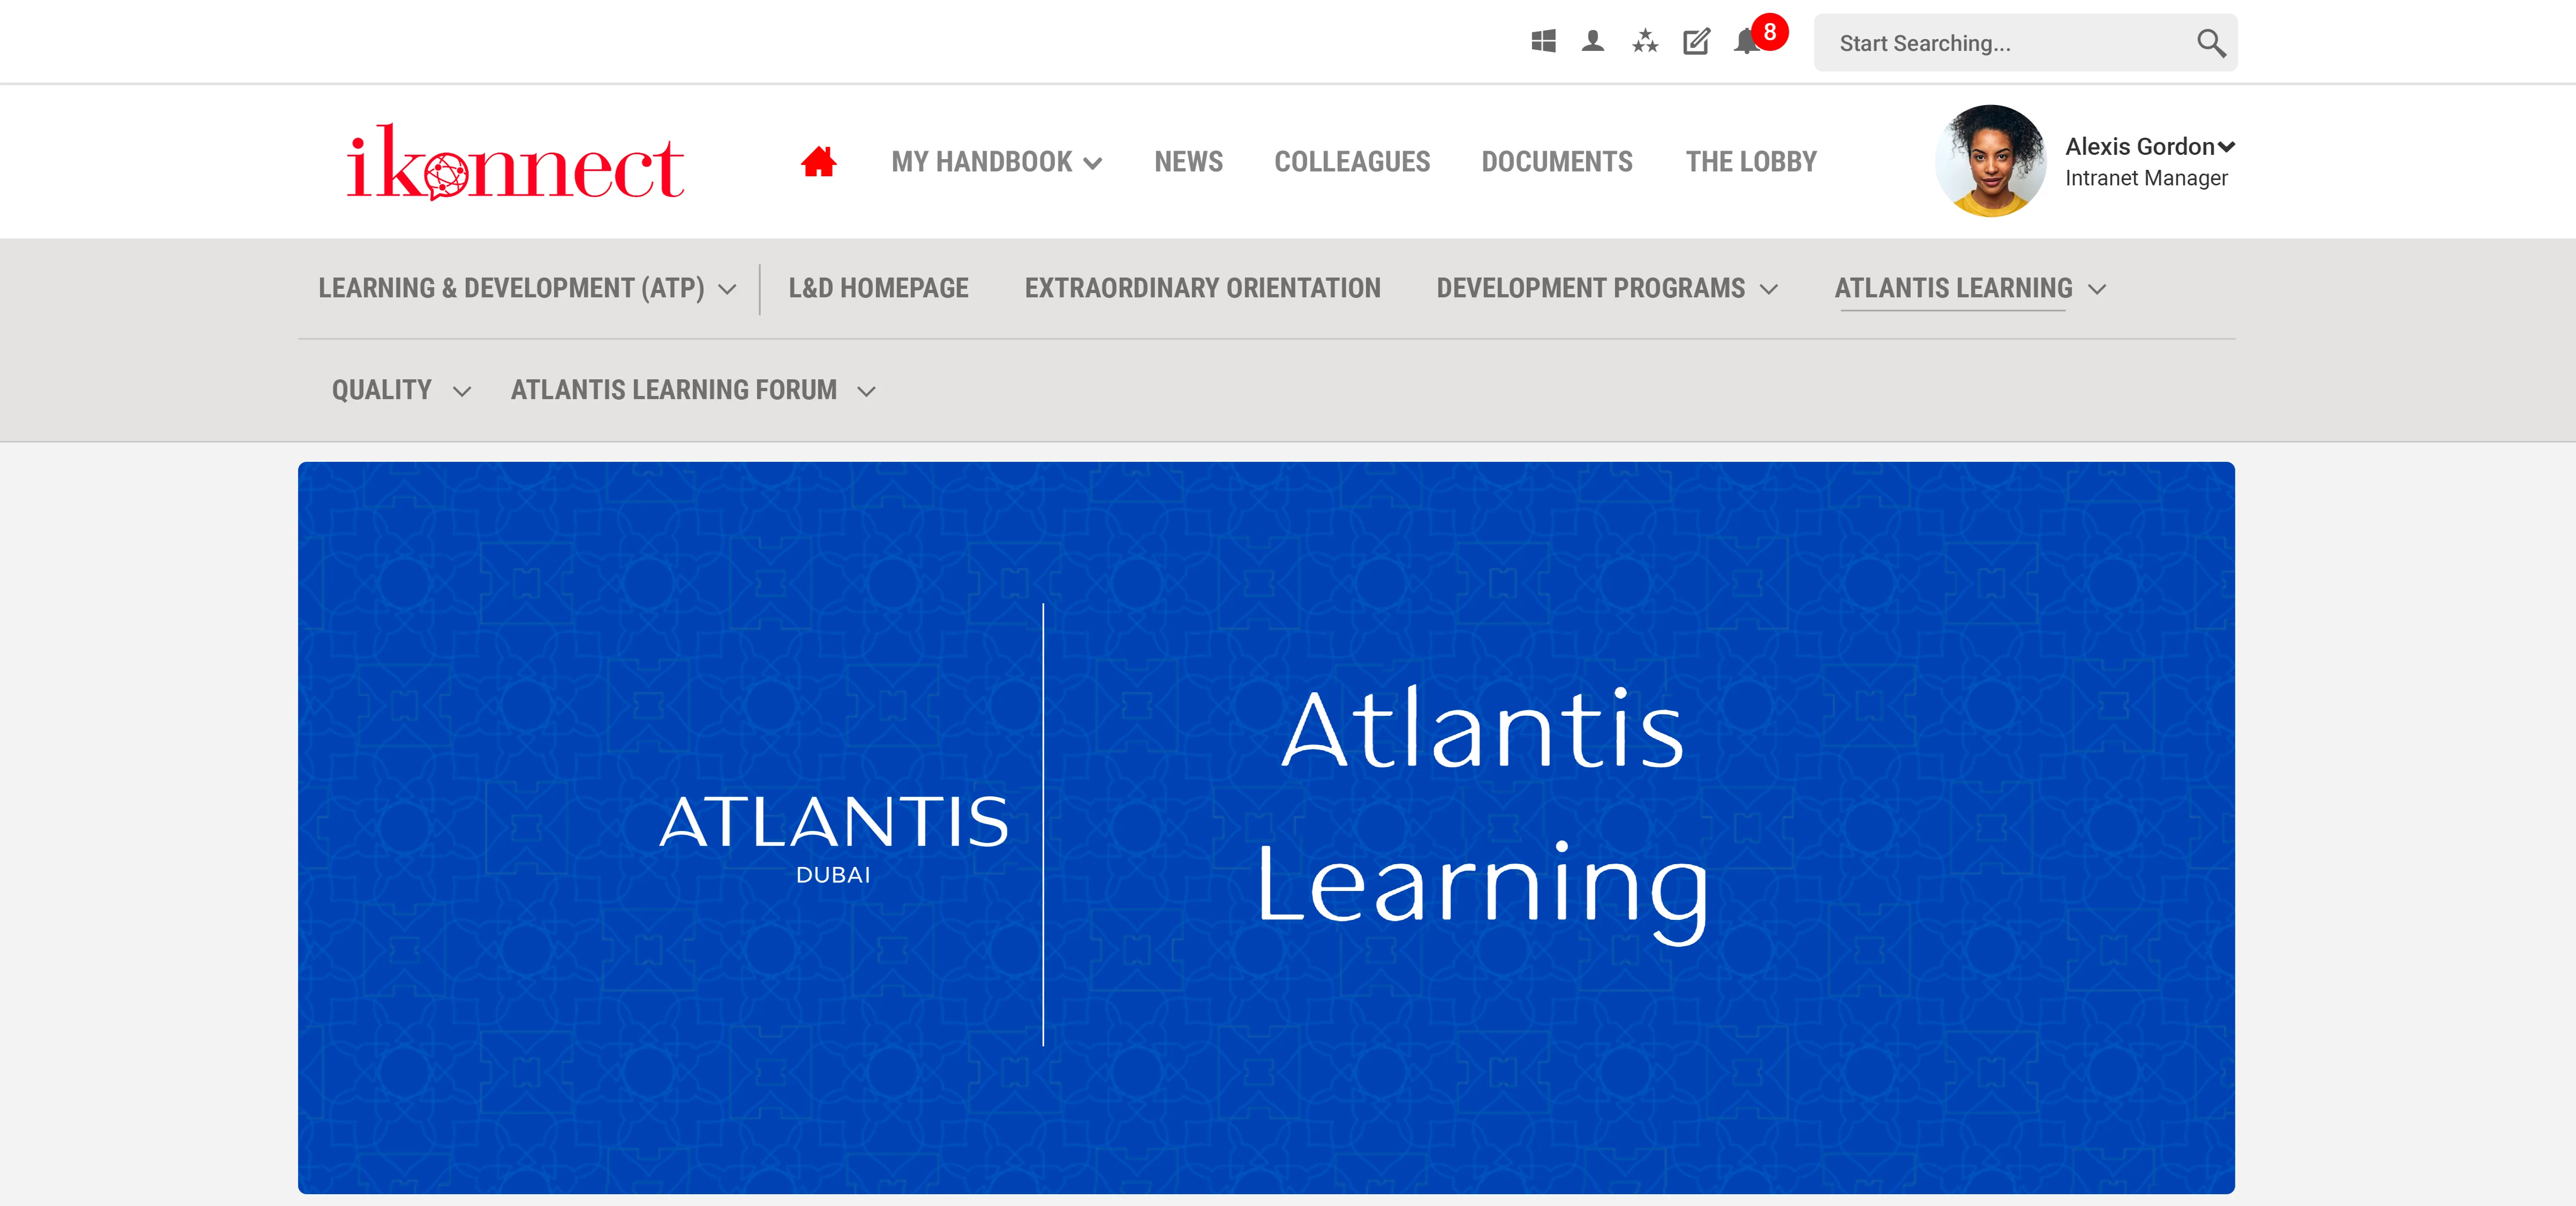 Kerzner_Atlantis_Learning.png